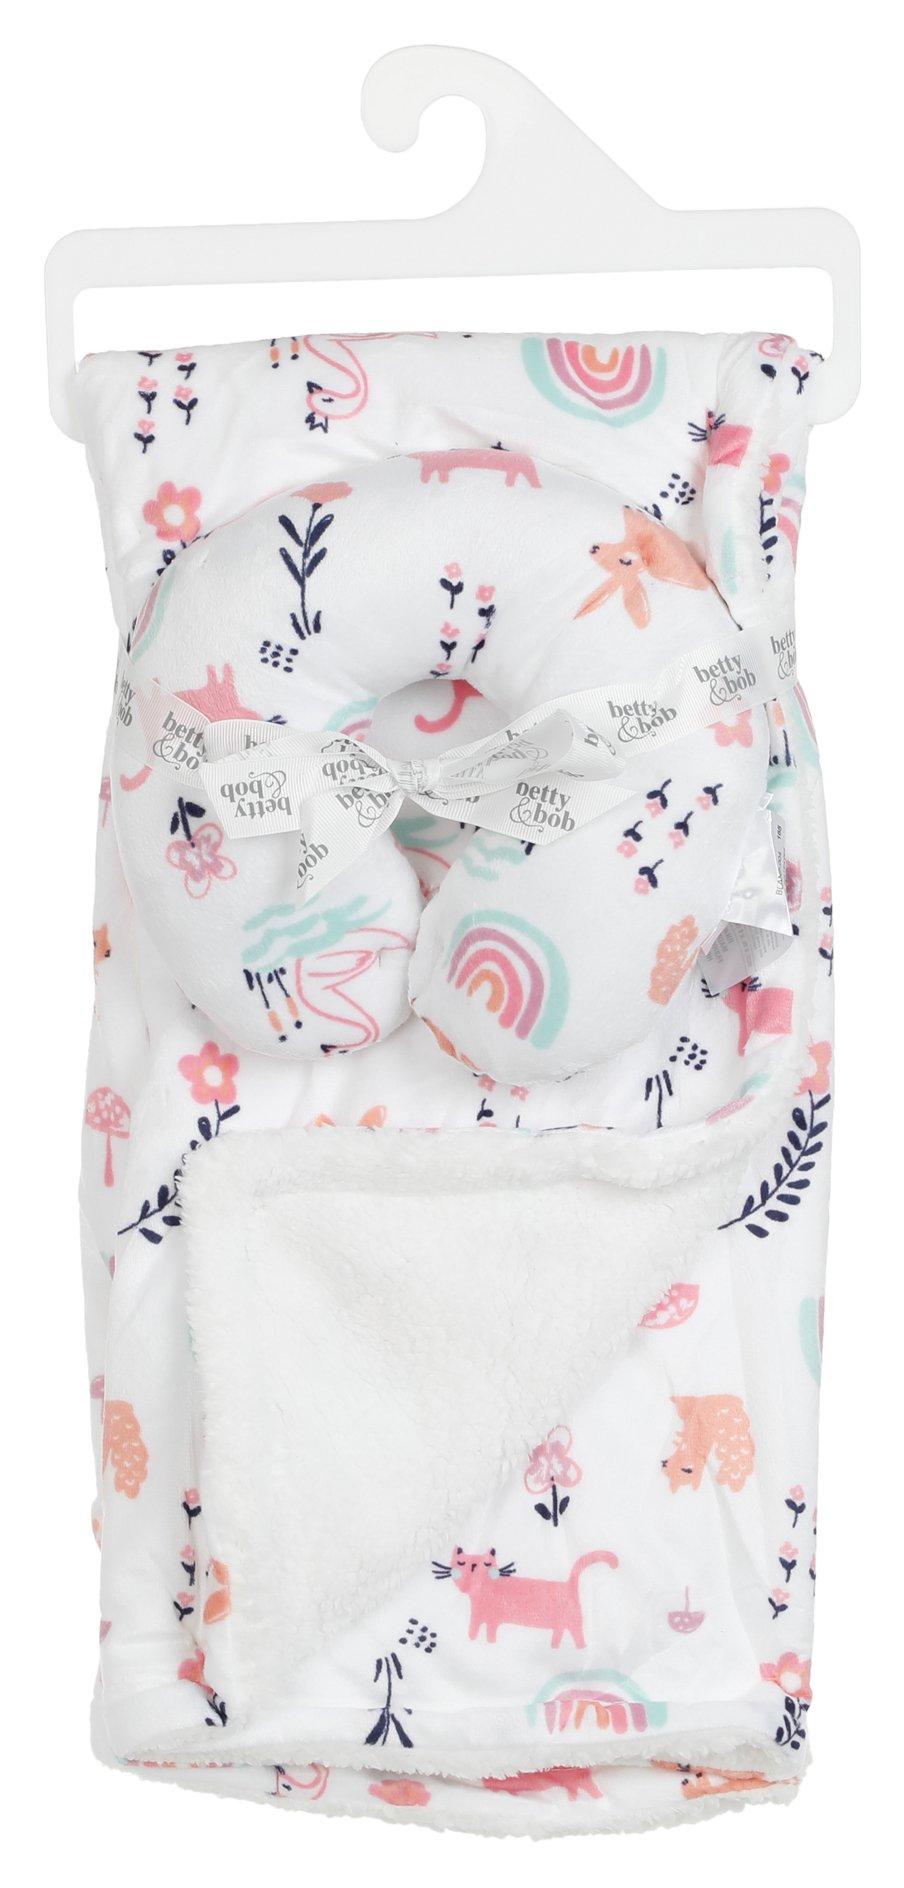 30x40 Floral Rainbow Print Baby Blanket & Travel Pillow